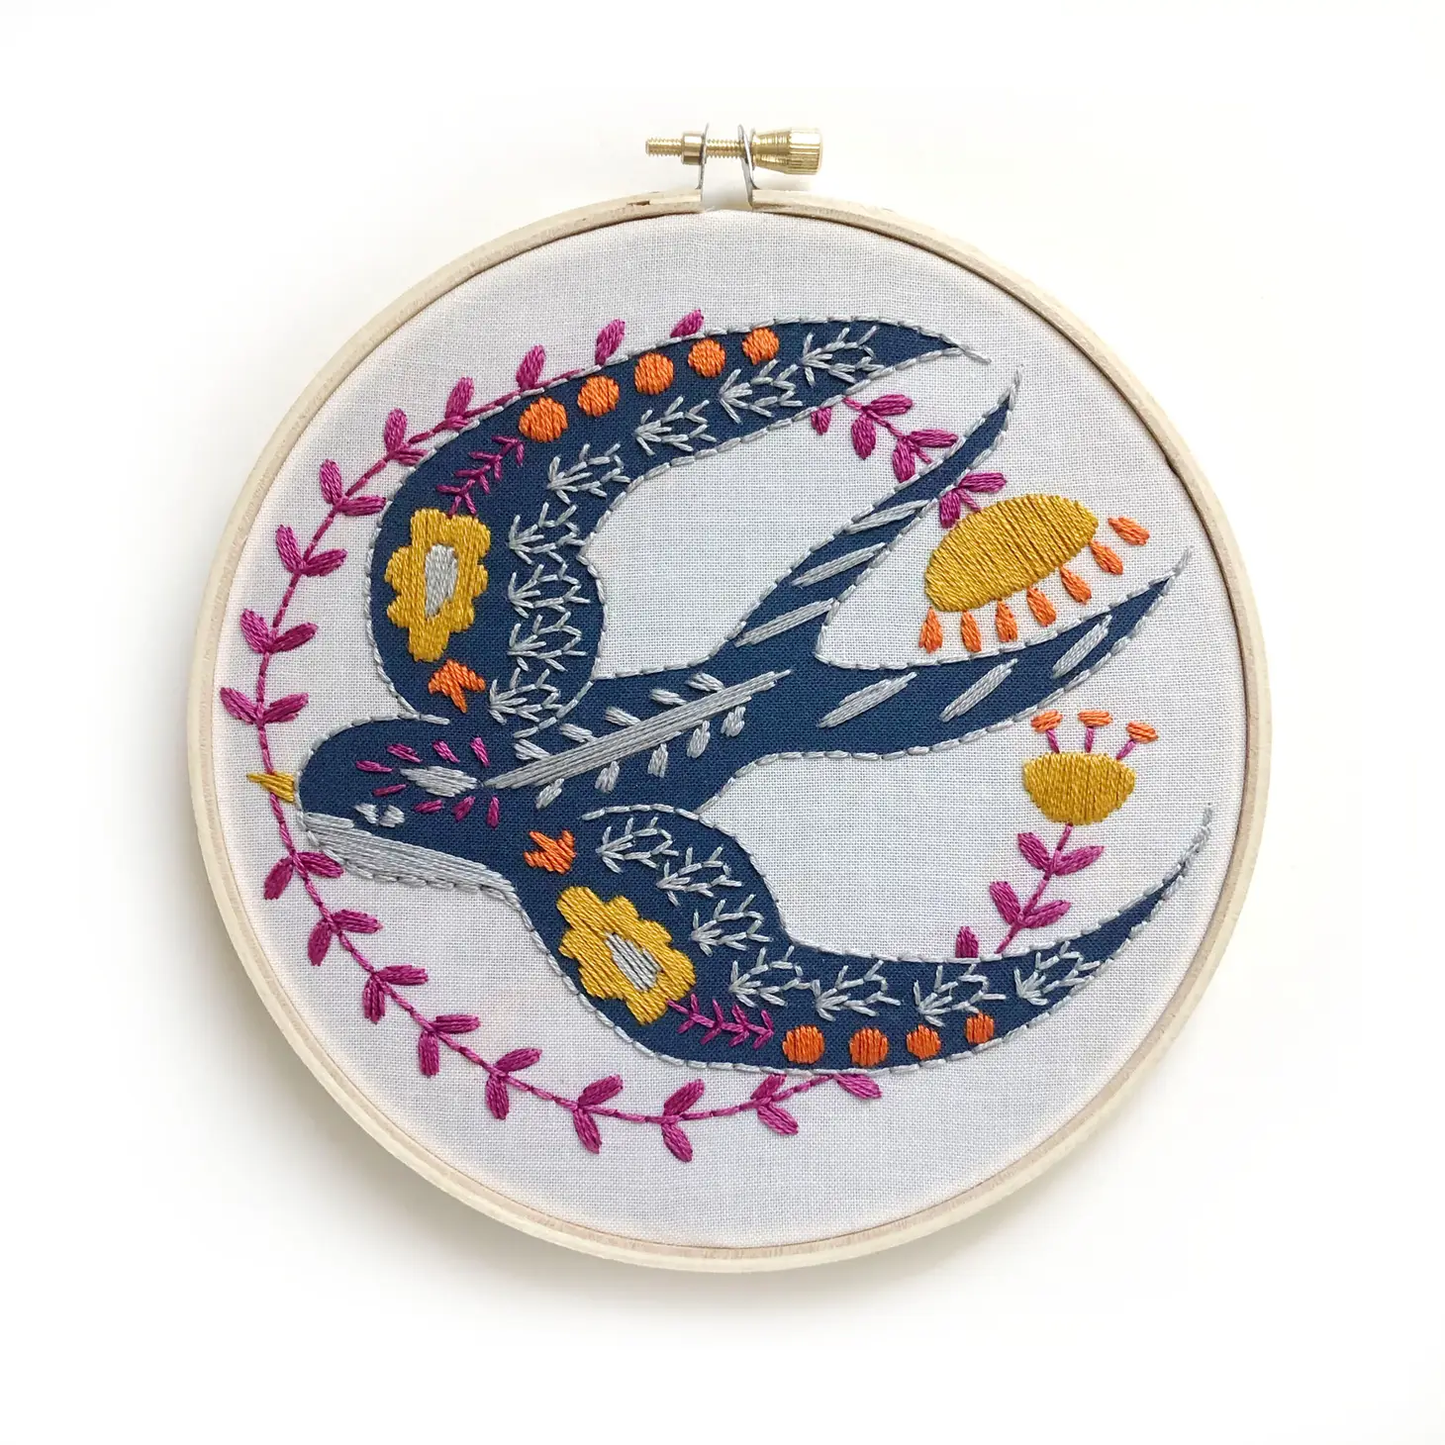 Embroidery Kits by Rikrack